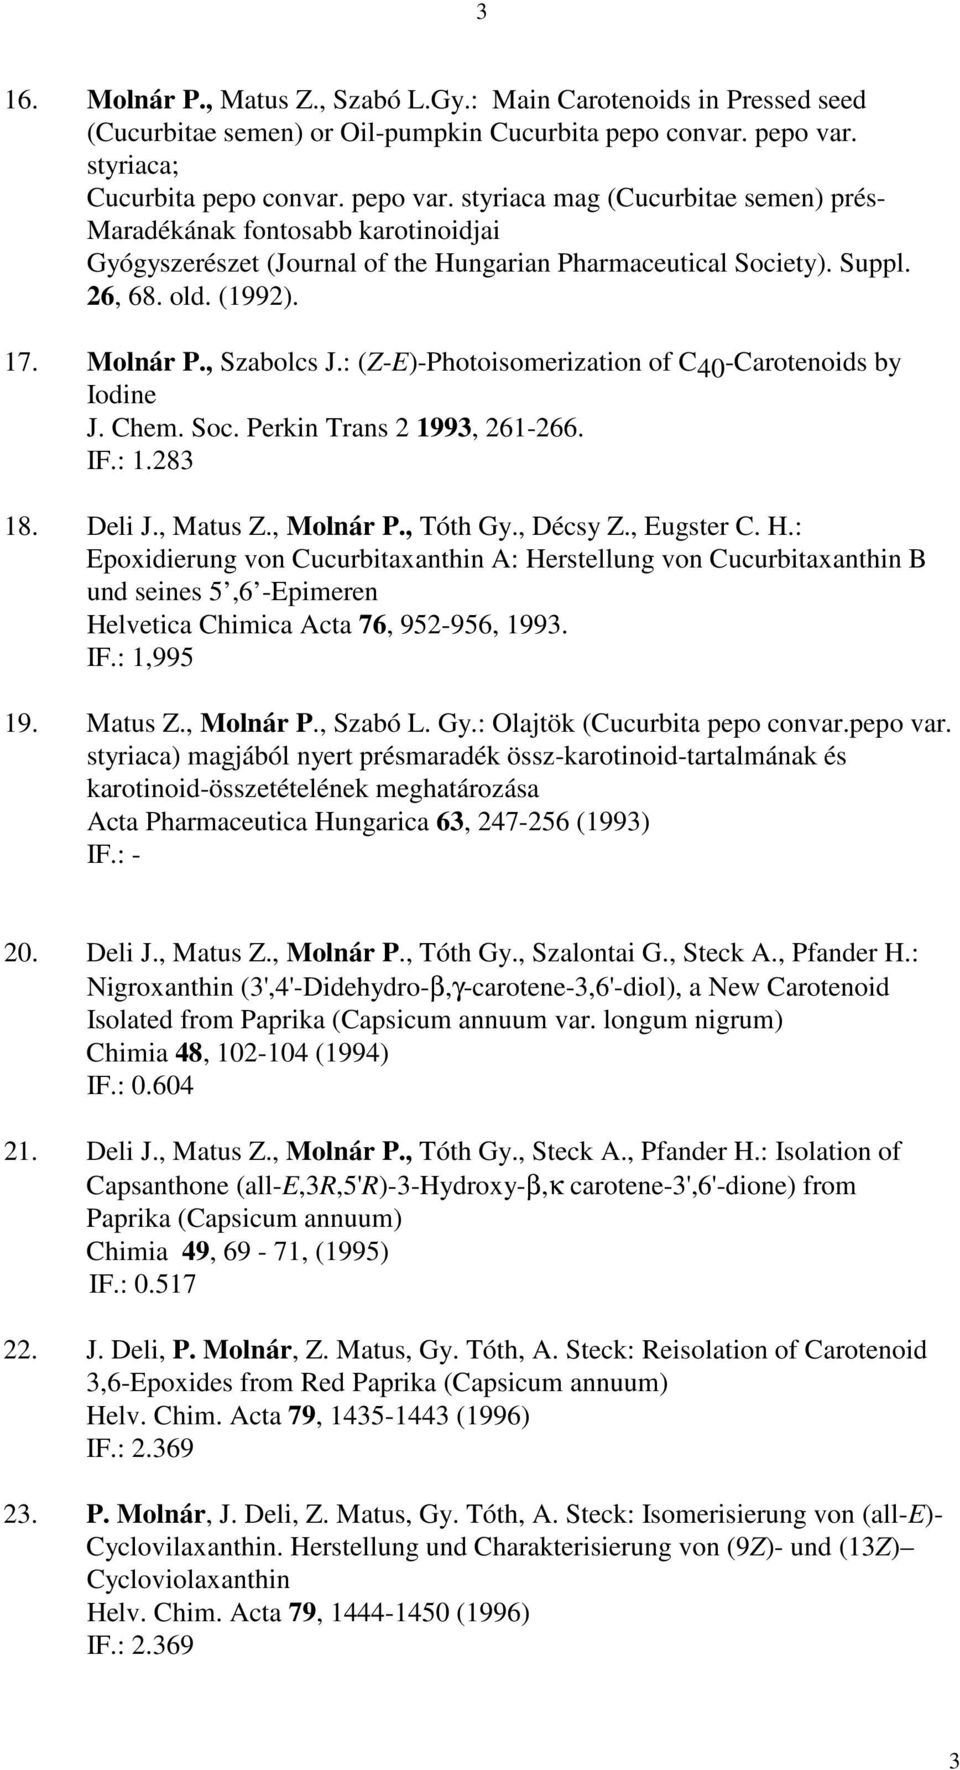 old. (1992). 17. Molnár P., Szabolcs J.: (Z-E)-Photoisomerization of C40-Carotenoids by Iodine J. Chem. Soc. Perkin Trans 2 1993, 261-266. IF.: 1.283 18. Deli J., Matus Z., Molnár P., Tóth Gy.